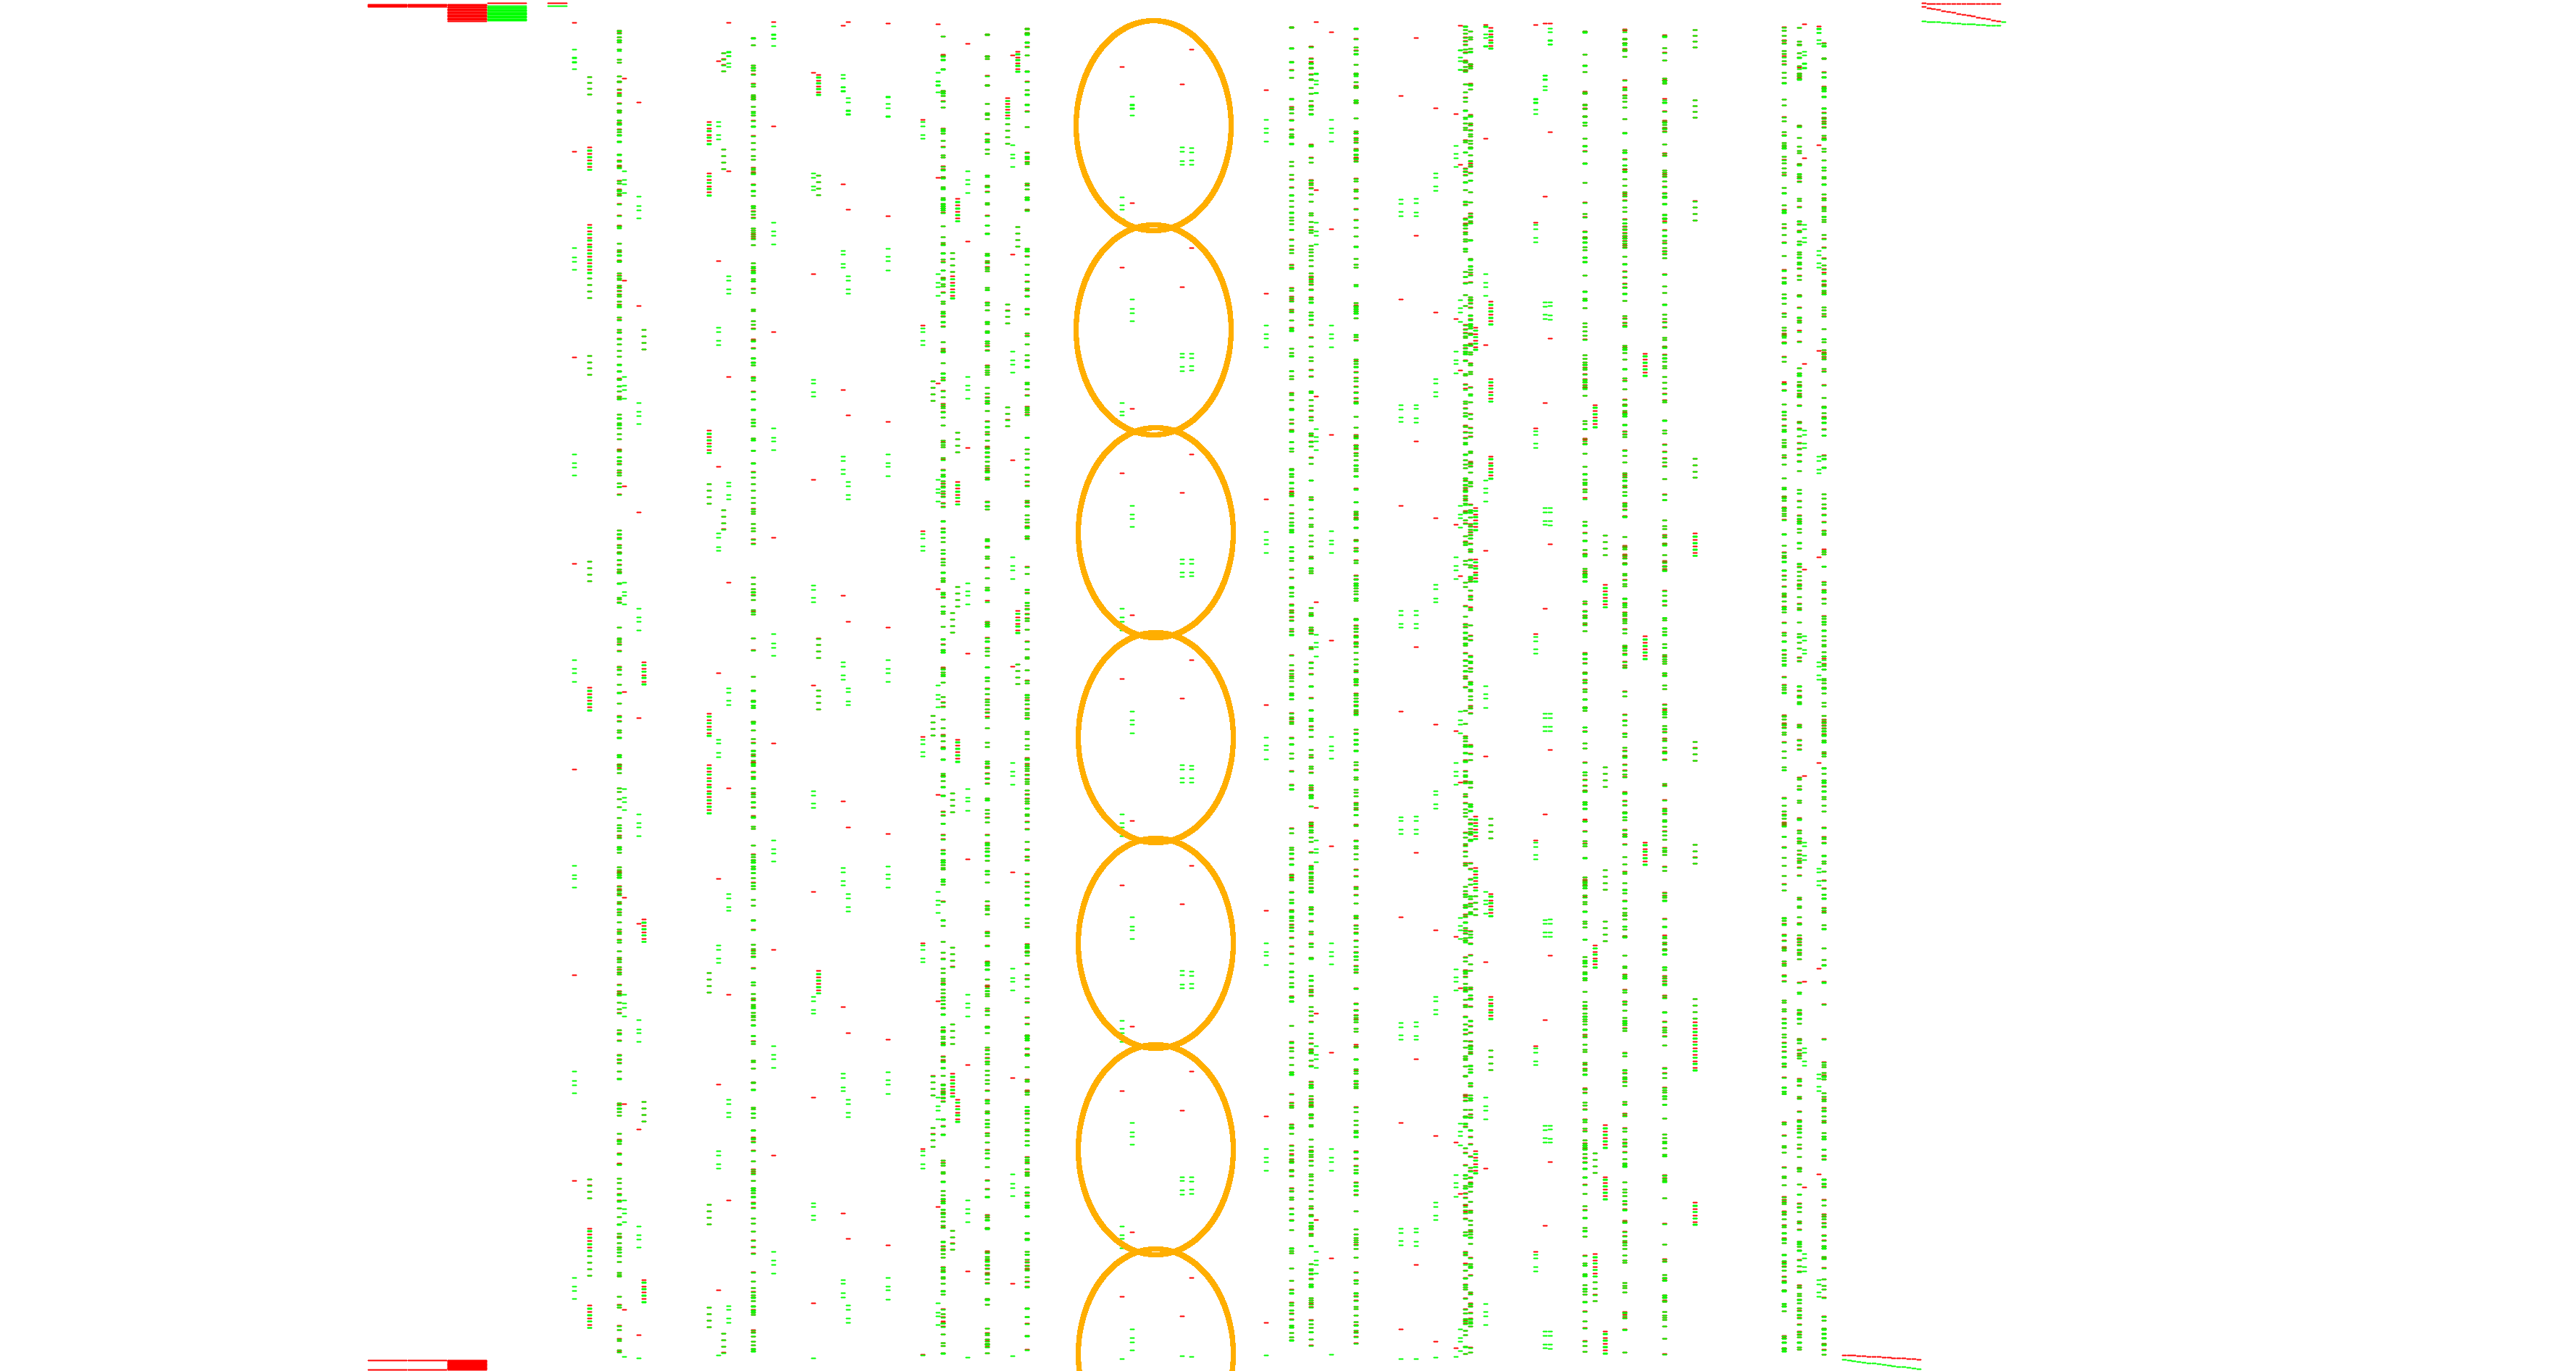 Visualization of one Kryptologik execution trace: the stack